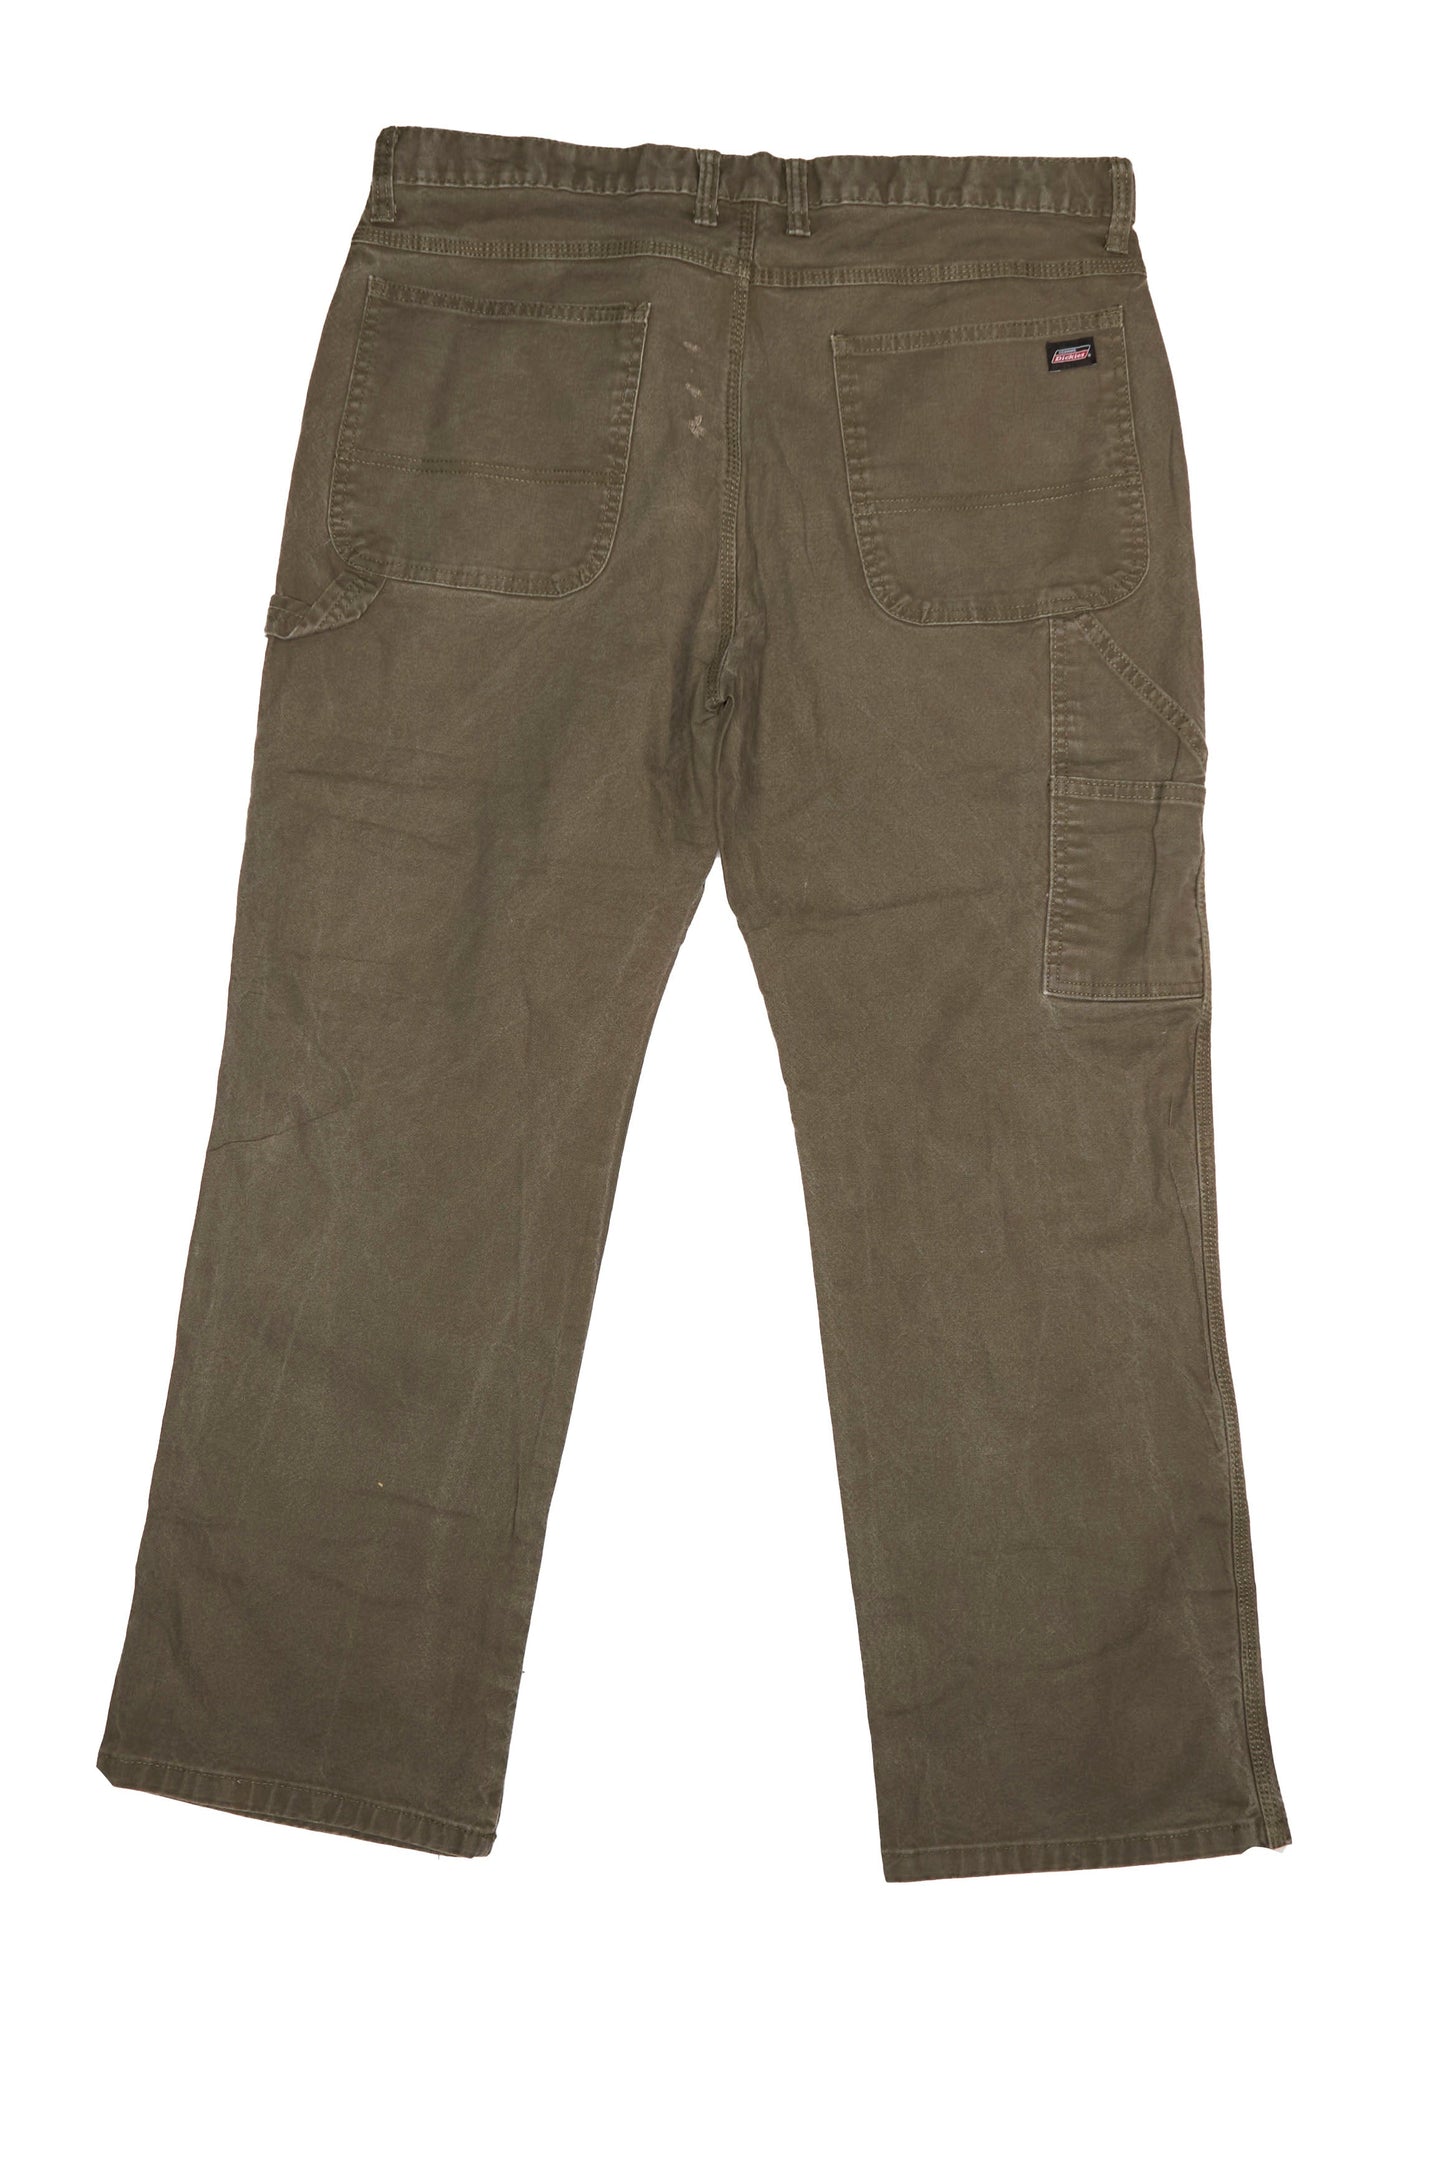 Dickies Trousers - W36" L30"